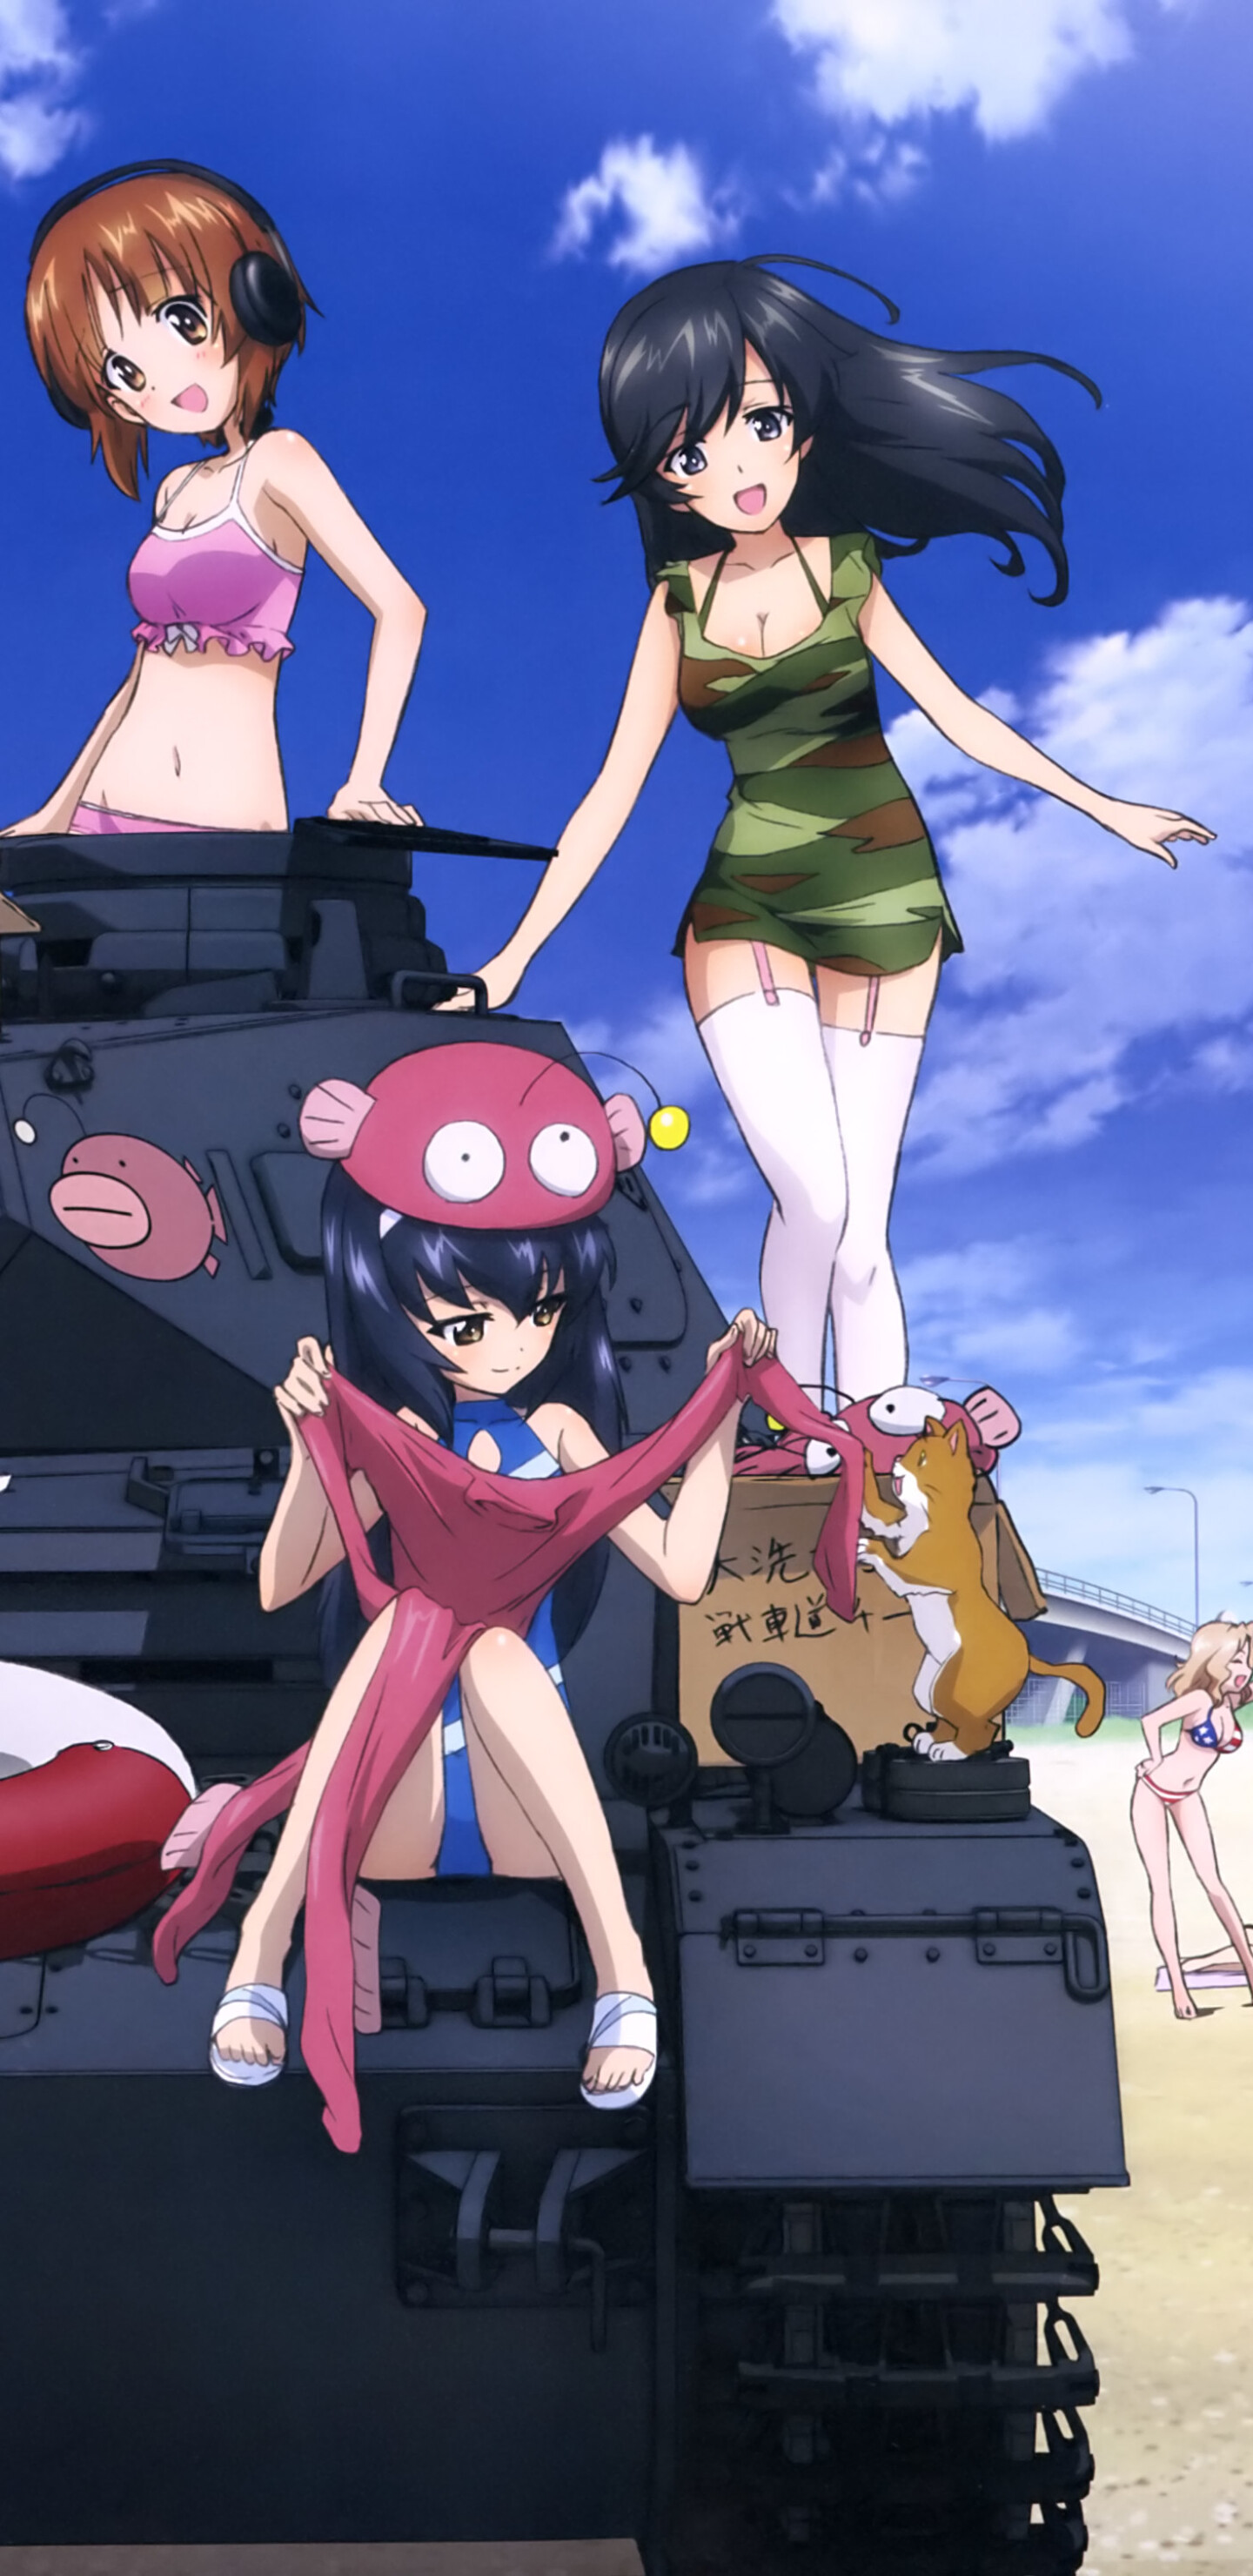 Girls und Panzer: Anglerfish Team, Miho Nishizumi, Mako Reizei, Hana Isuzu, Anime warfare series. 1440x2960 HD Wallpaper.